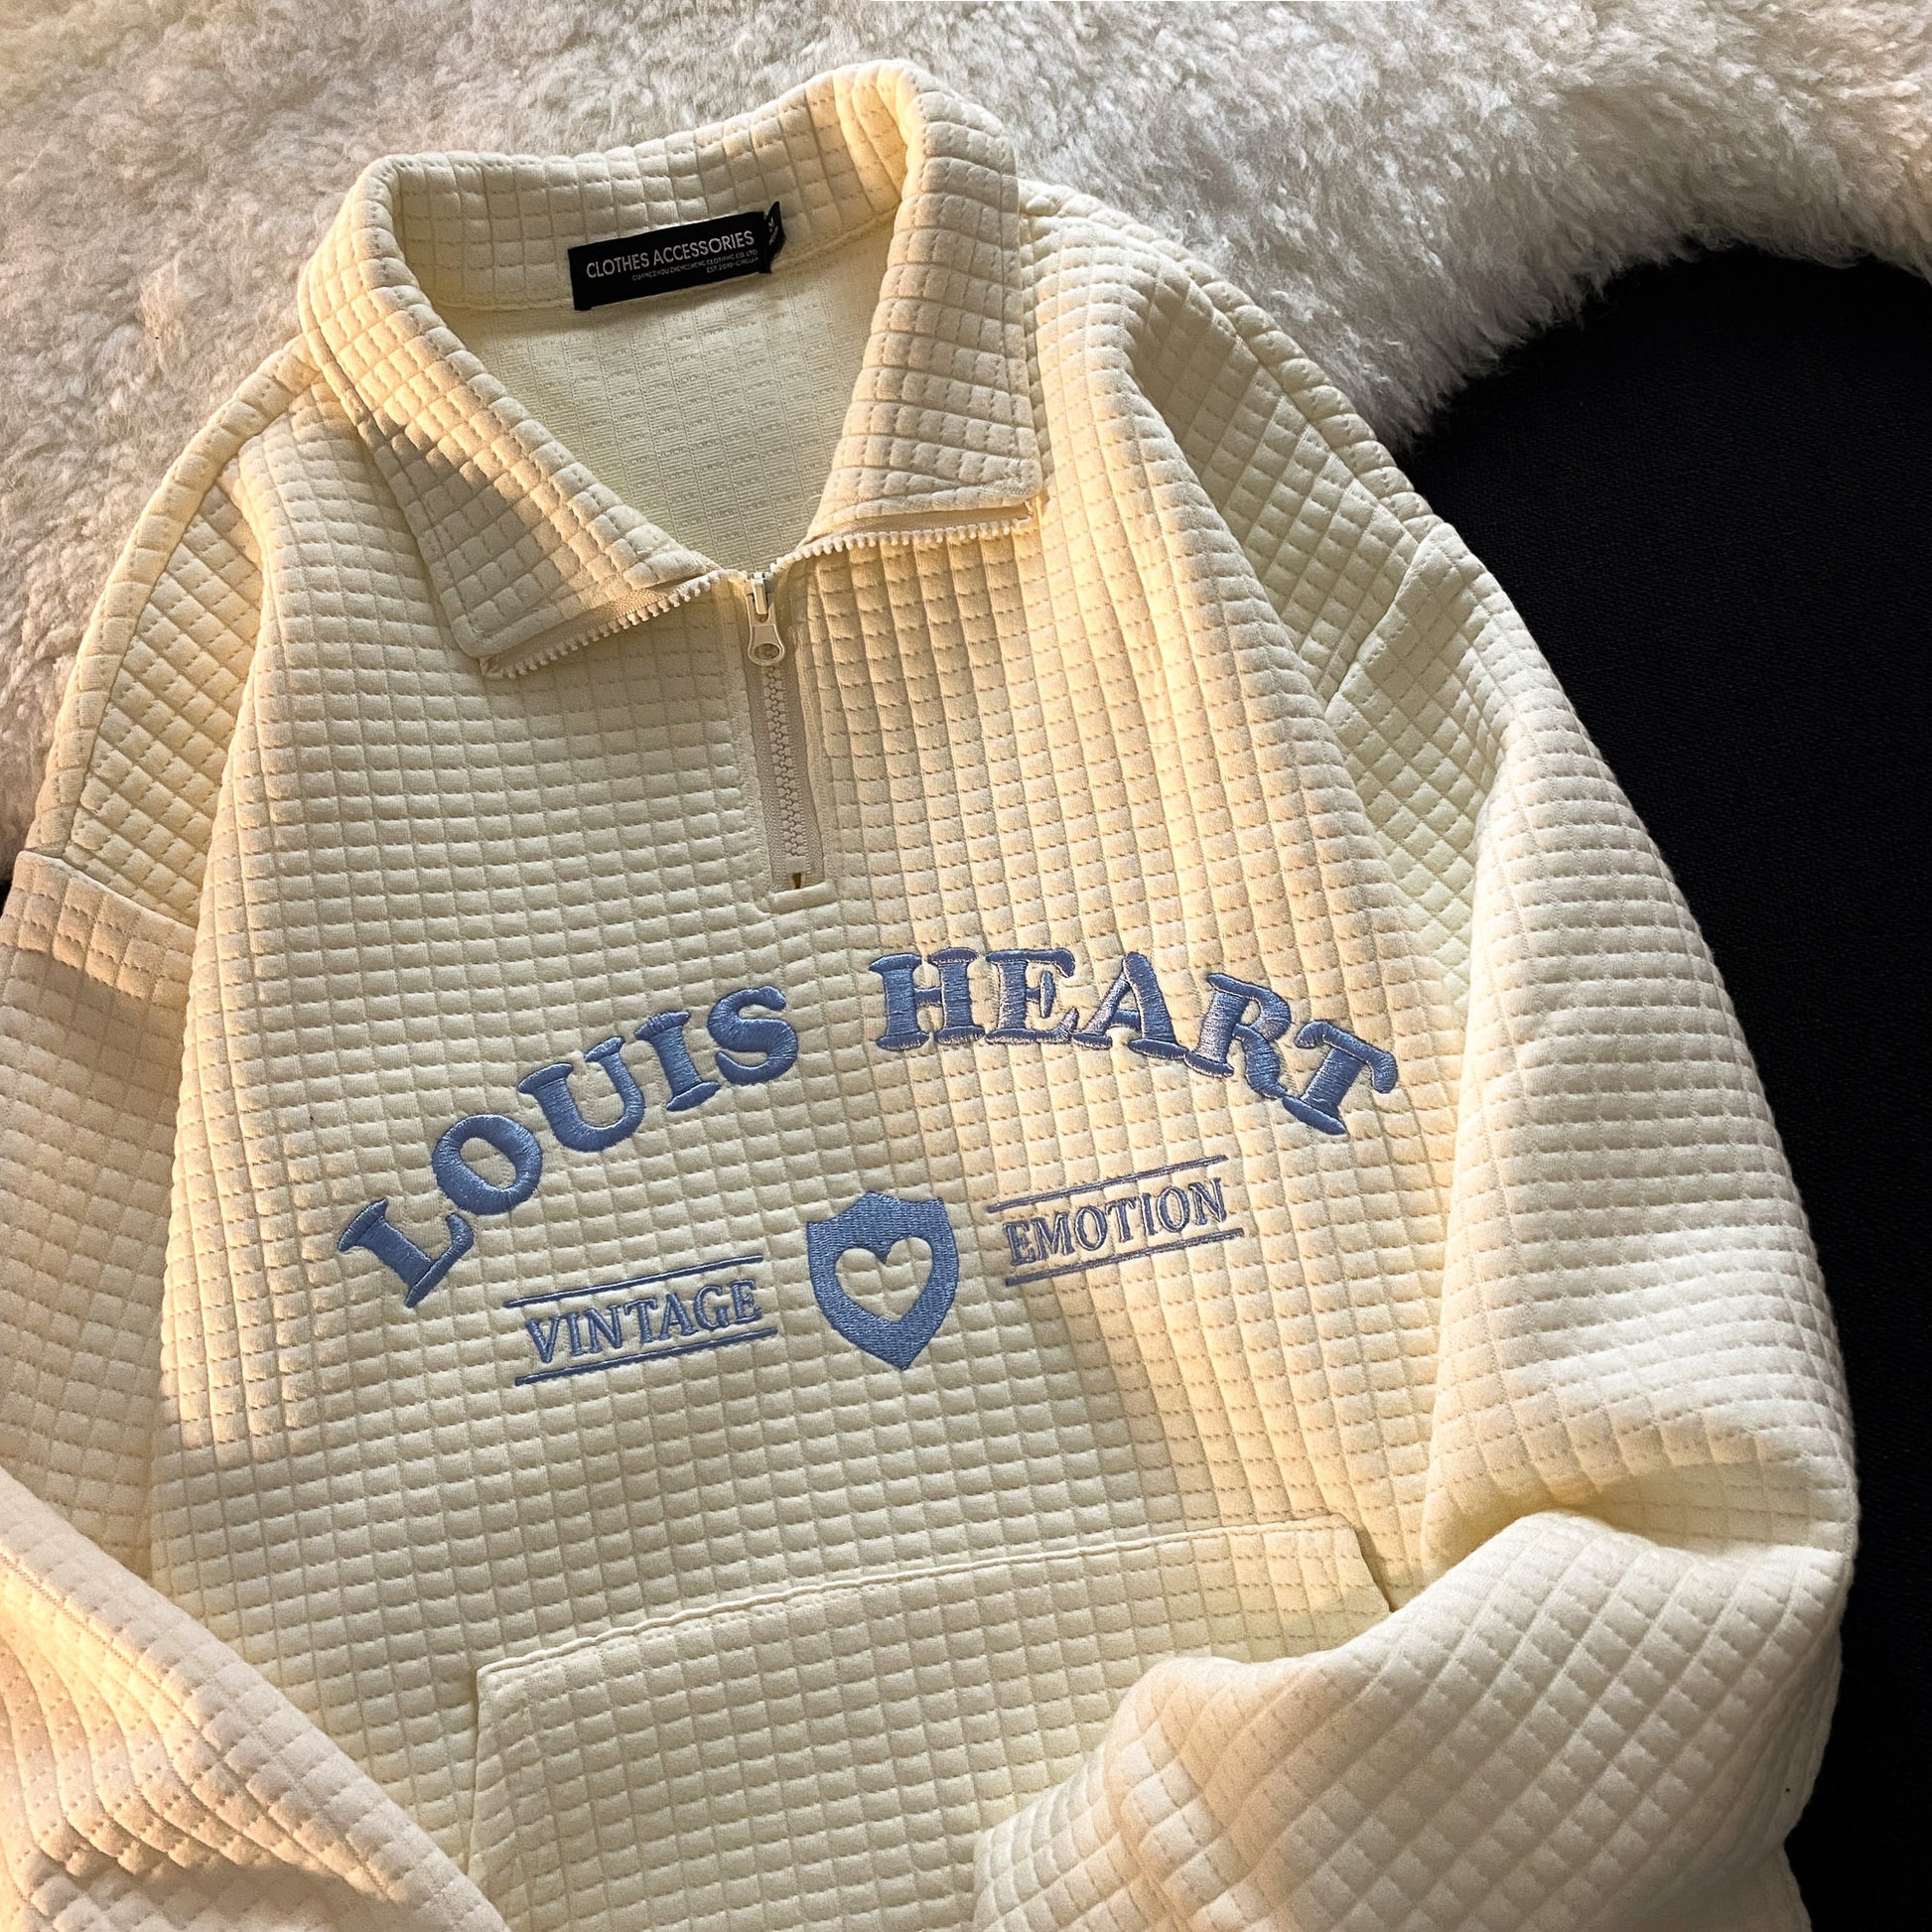 Louis Vuitton Printed Heart Sweatshirt crewneck grey sz L